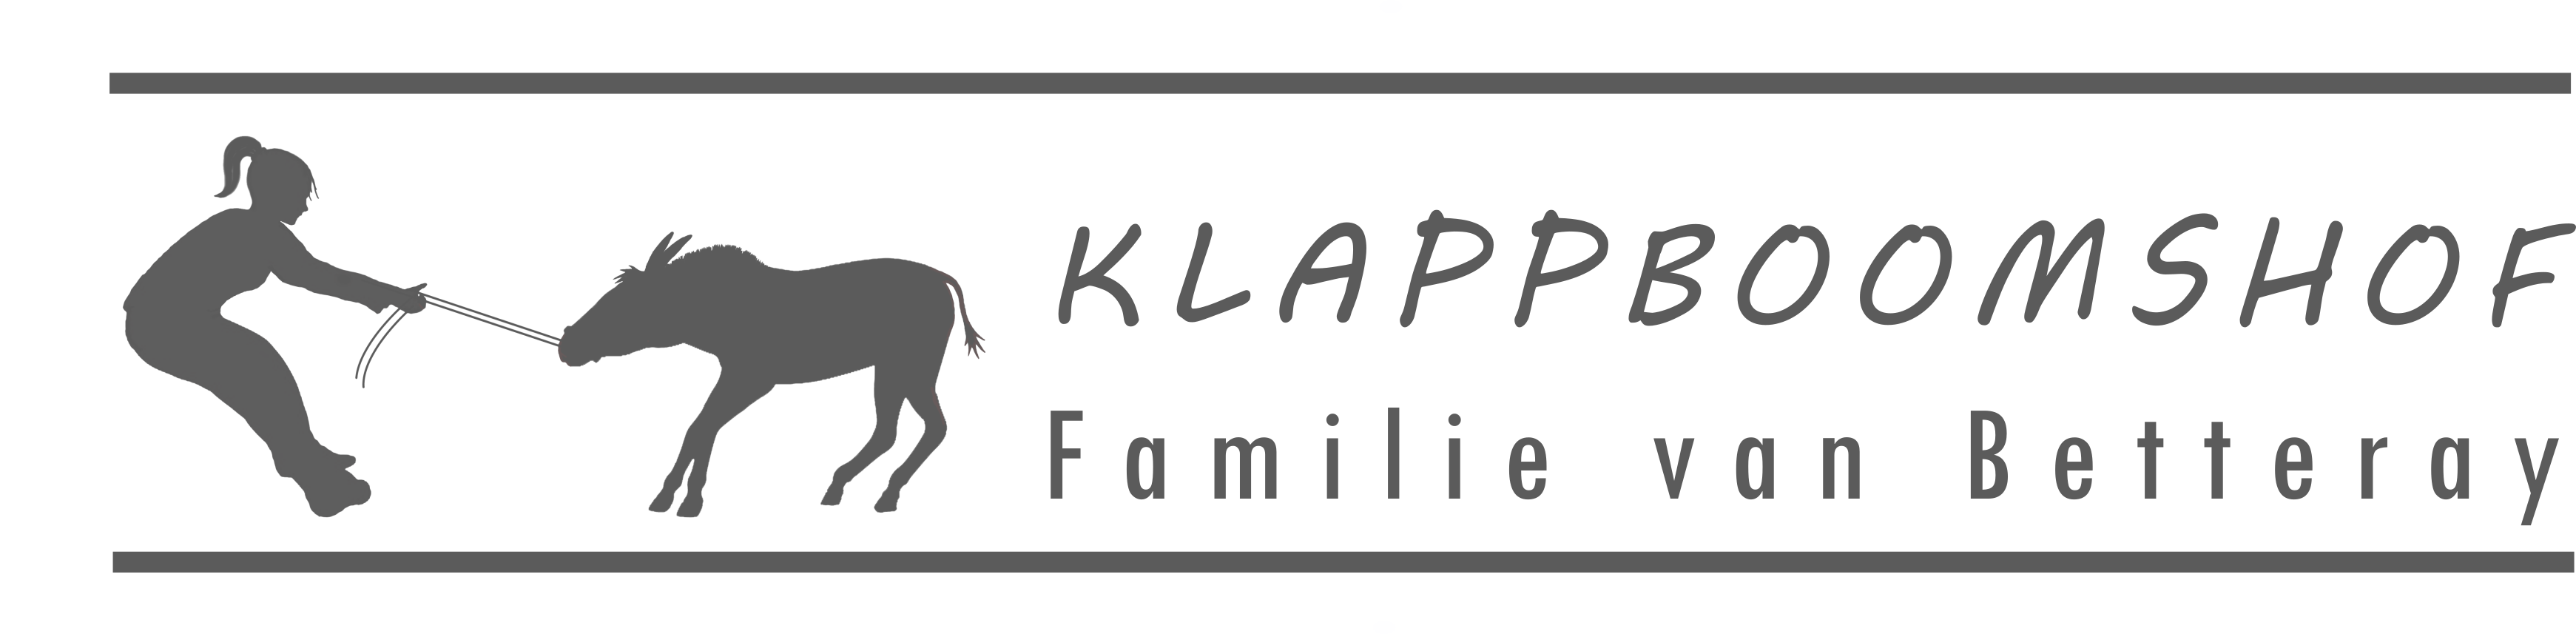 Logo Klappboomshof